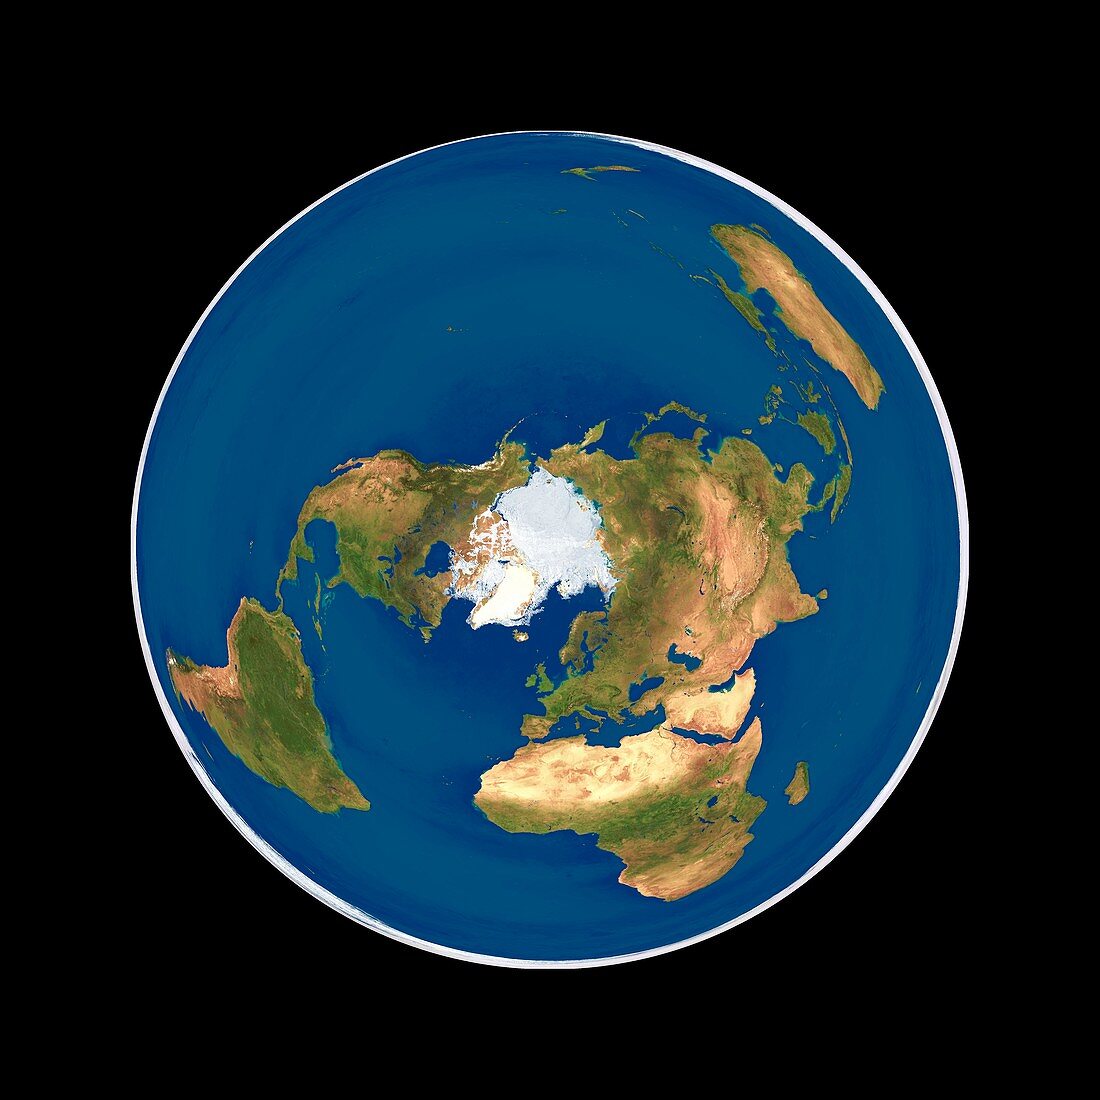 Earth,satellite image